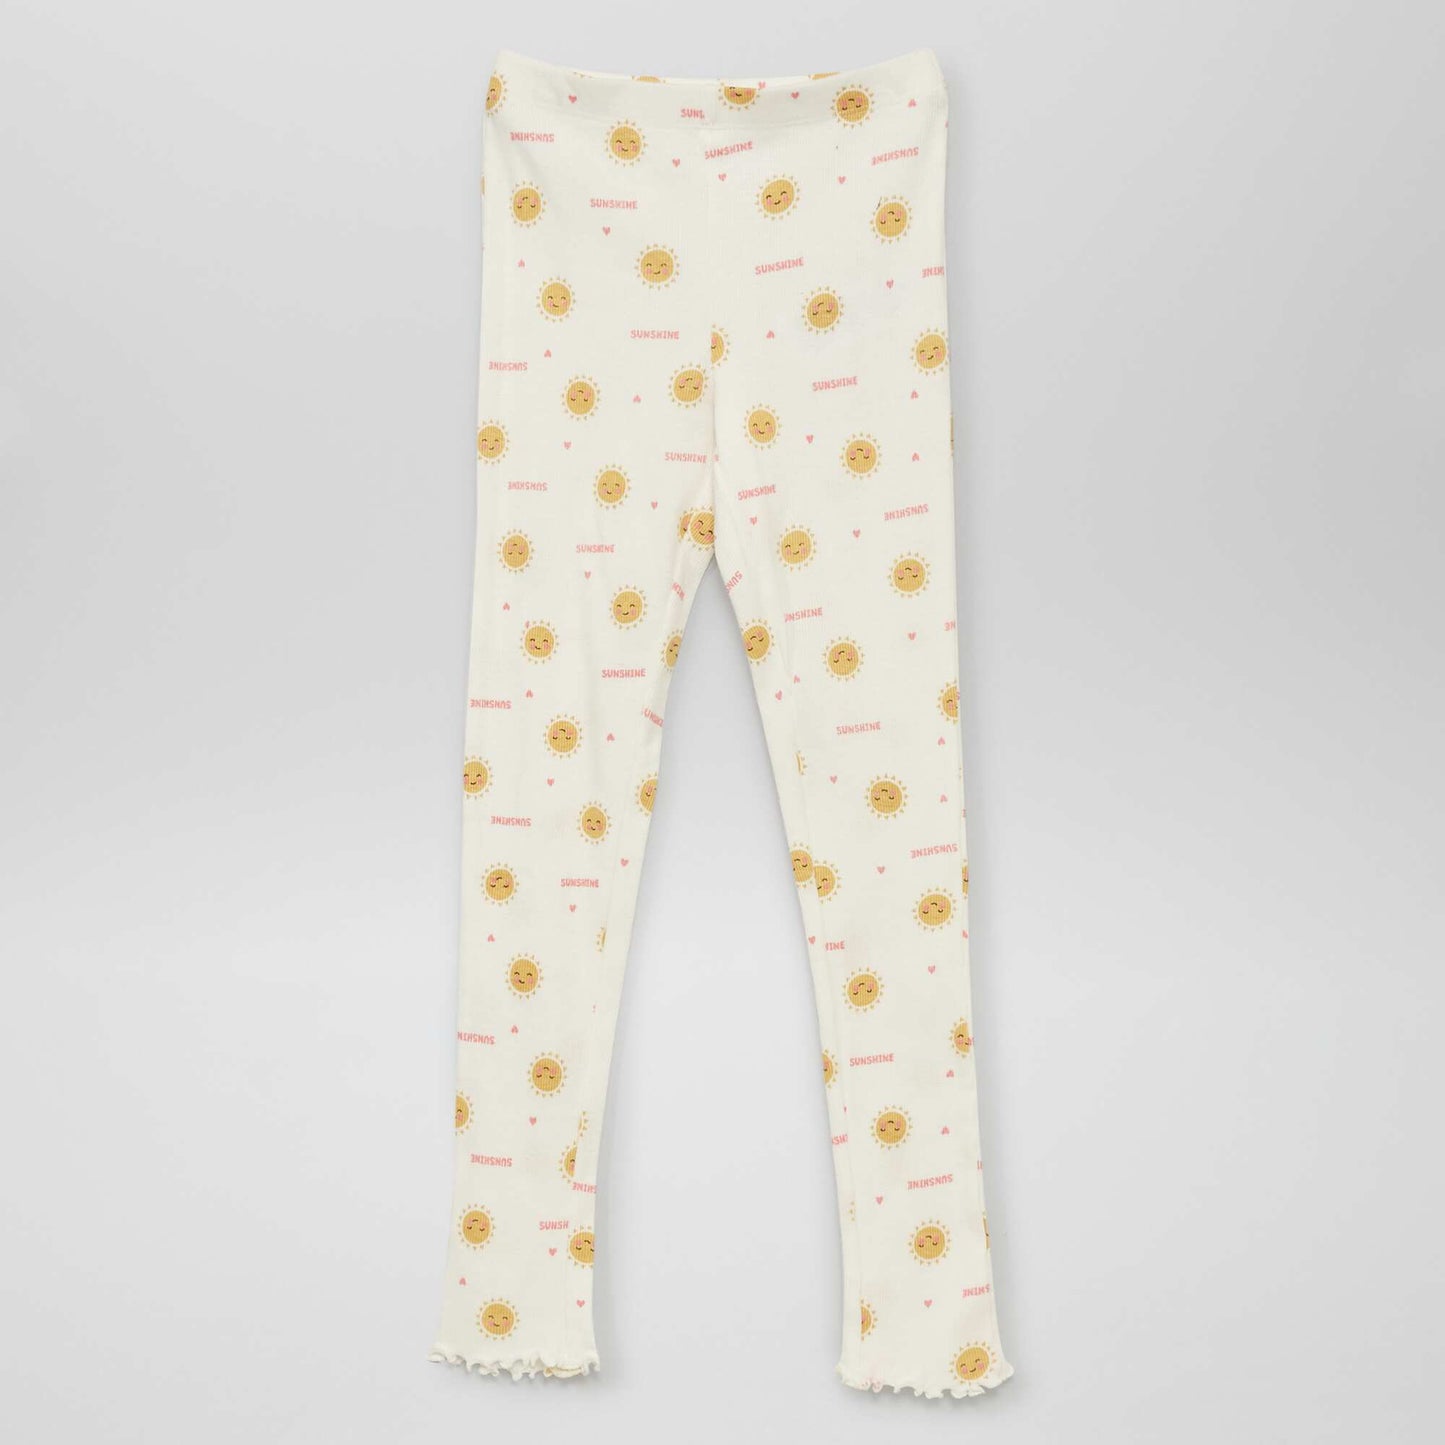 Long ribbed knit pyjamas - Two-piece set WHITE